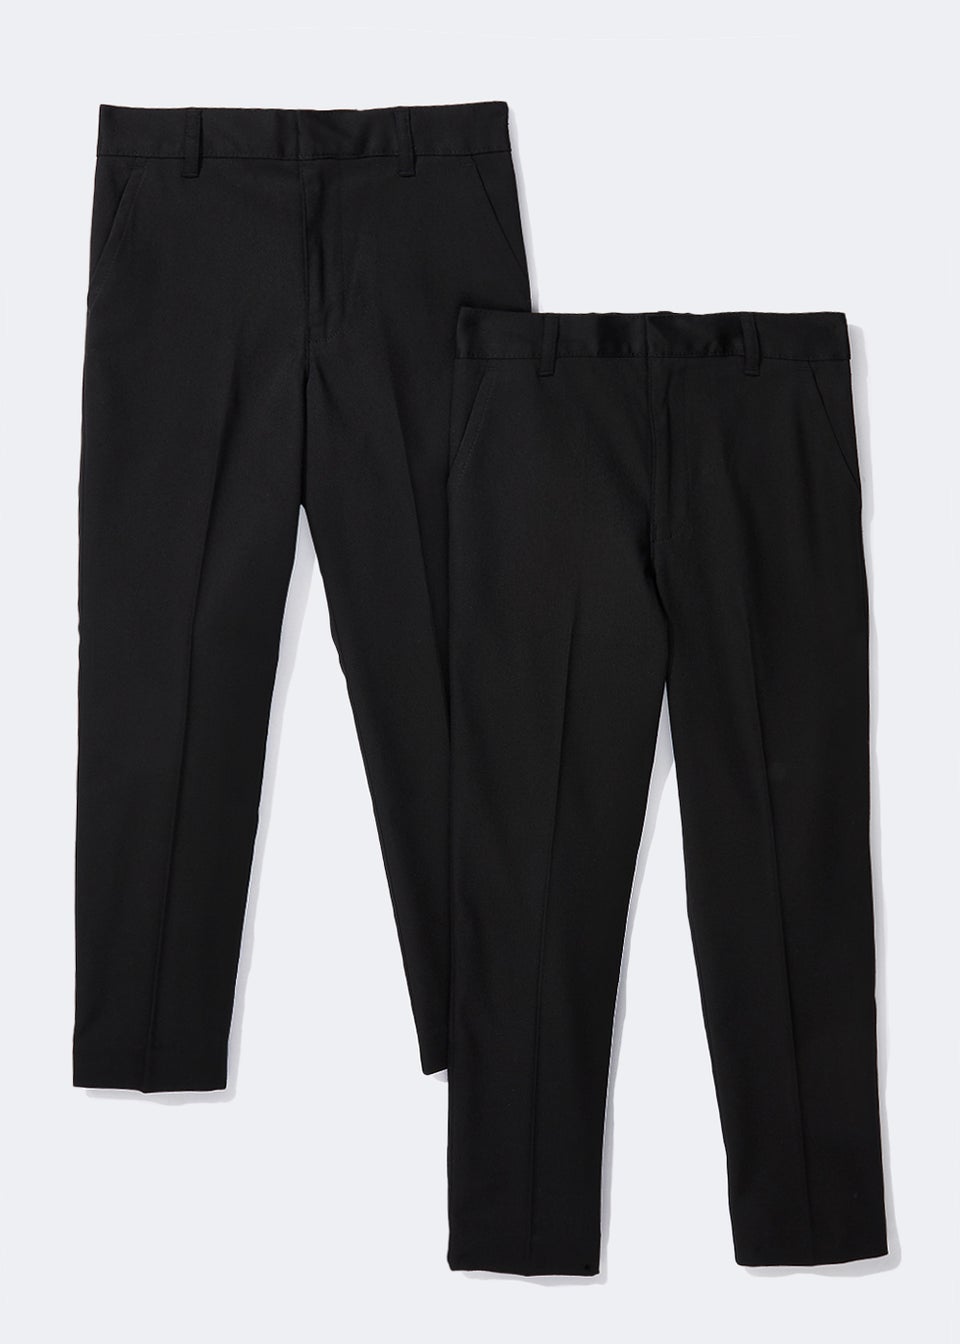 Girls Skinny School Trousers Navy Blue Black Stretch Women Work Invisible  Zip | eBay